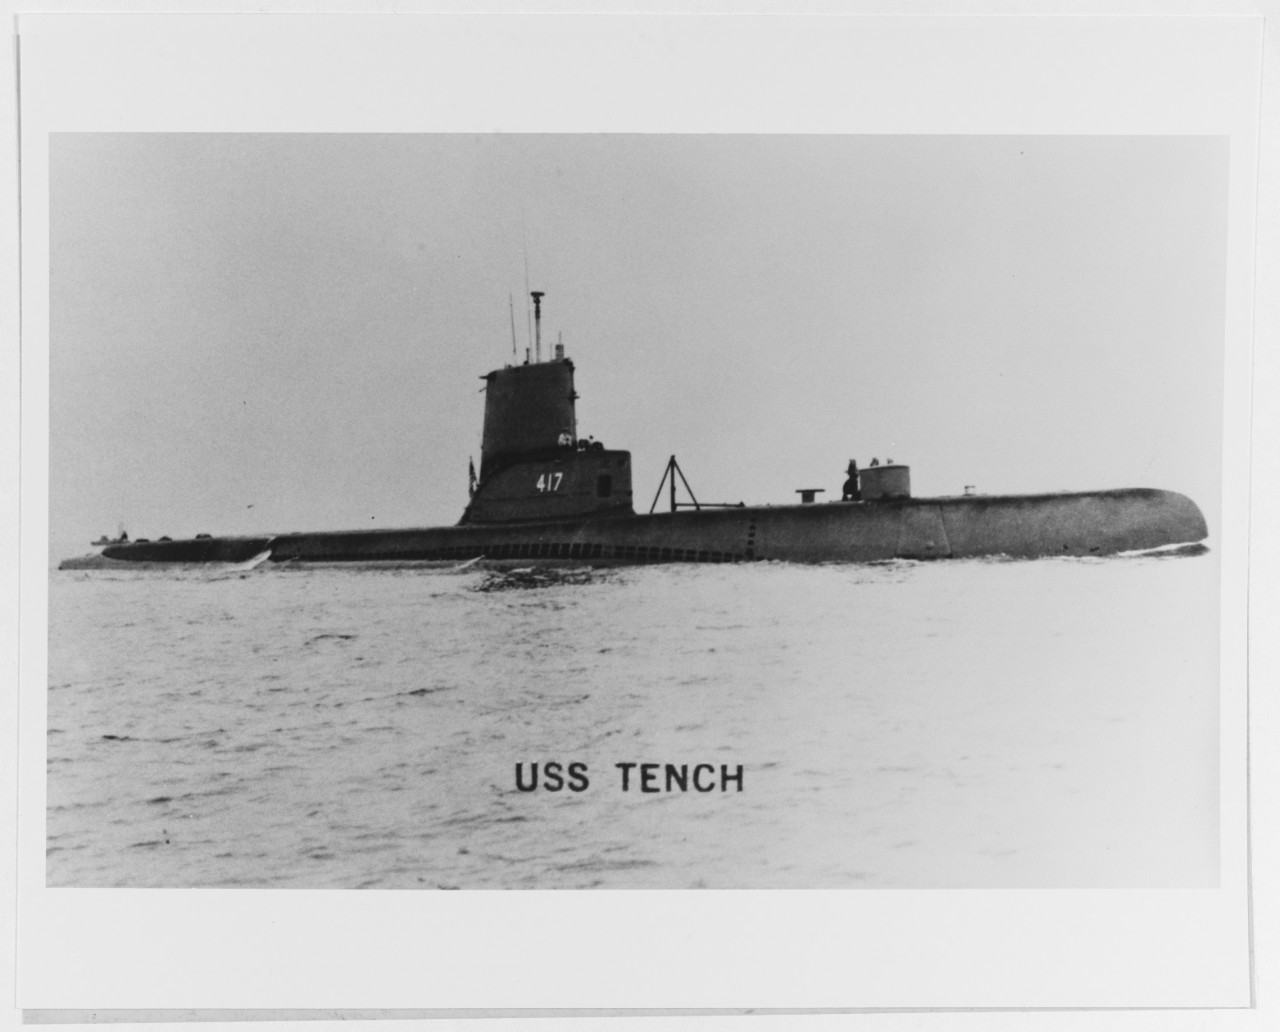 USS TENCH (SS-417)